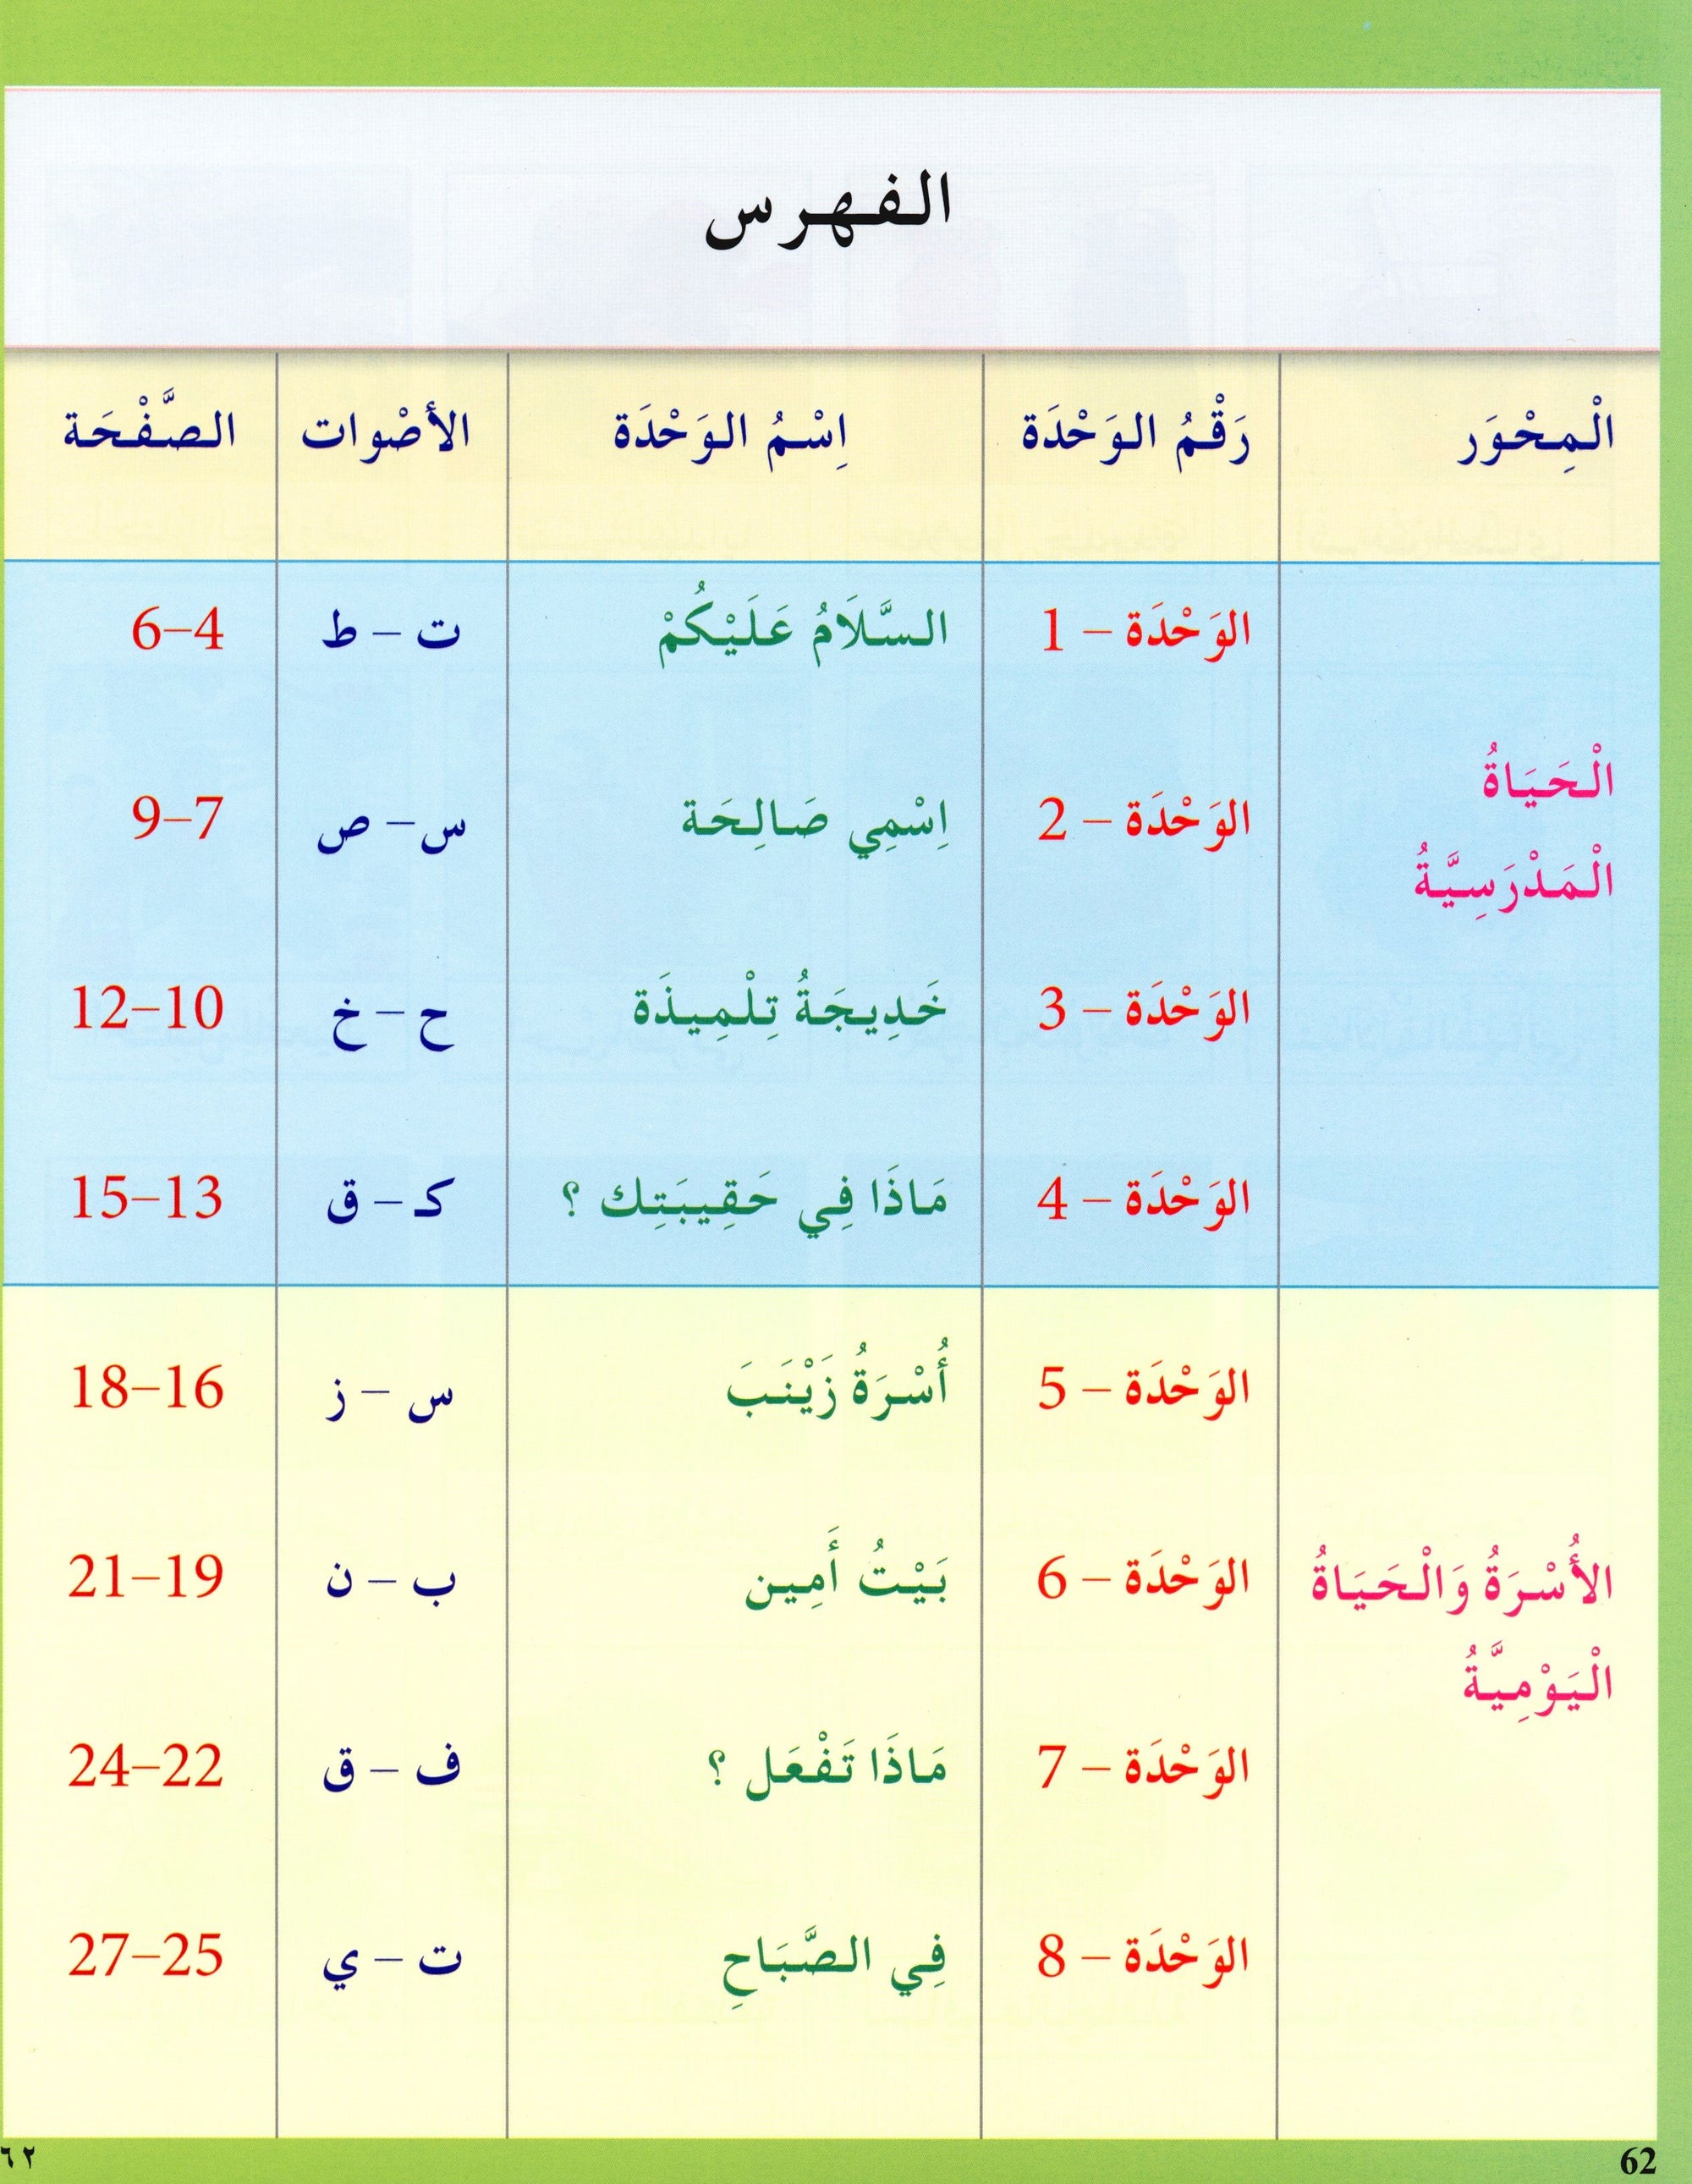 I Love The Arabic Language Textbook Level 2 أحب اللغة العربية